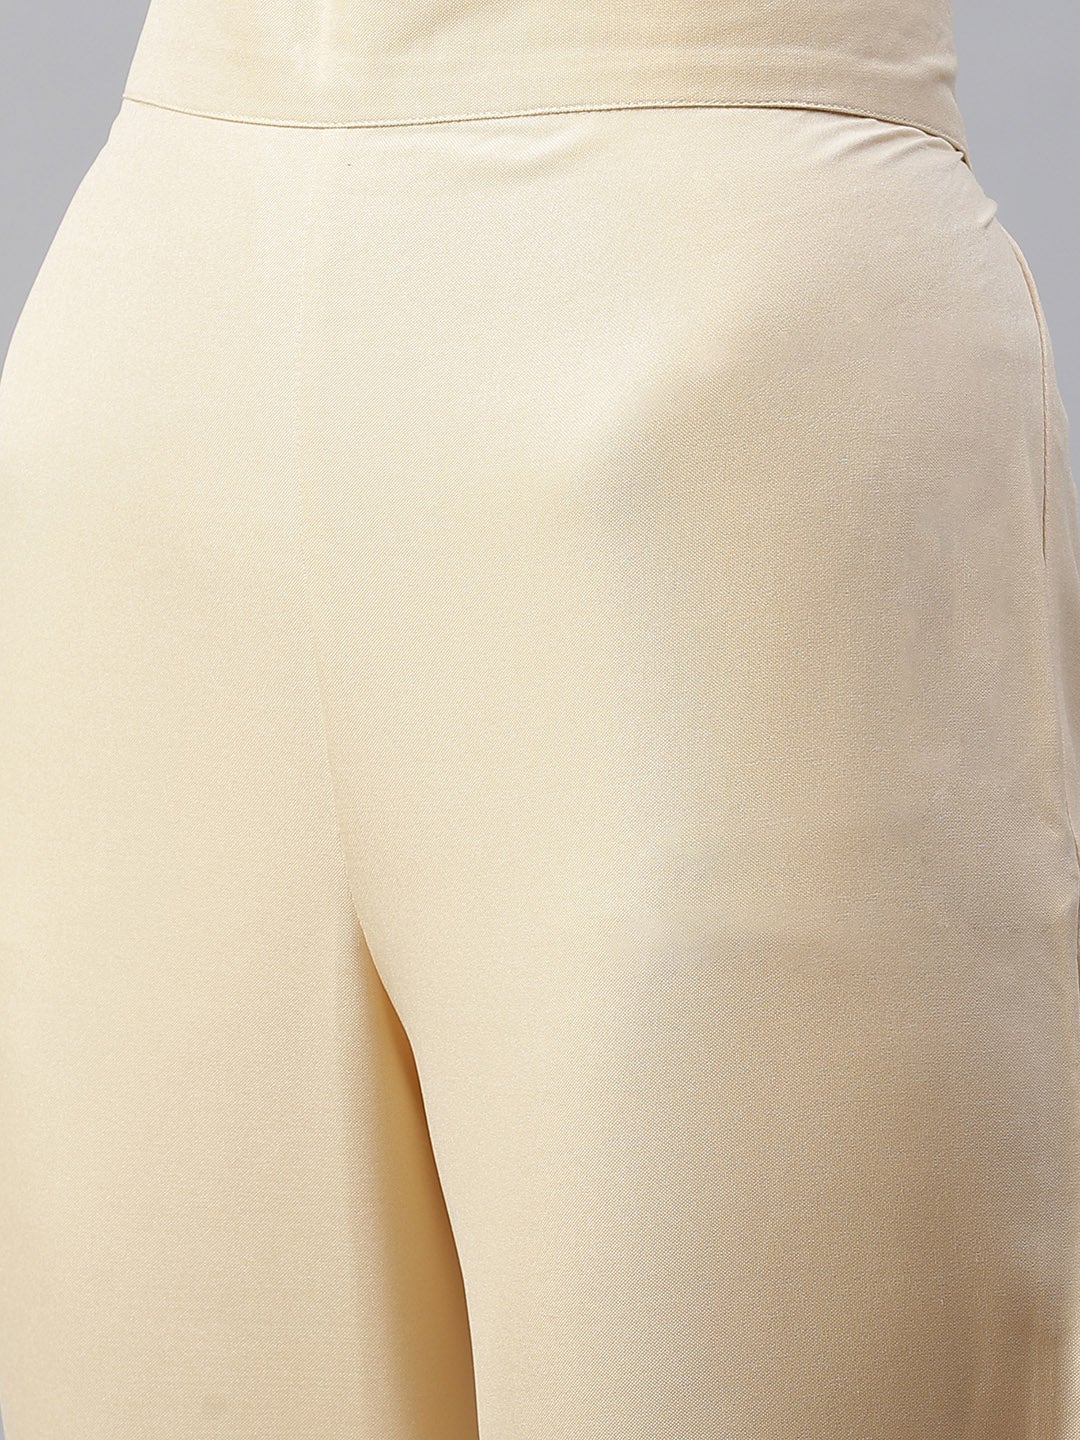 Mindhal Women's Mustard Color Digital Printed Straight Kurta And Pant Set